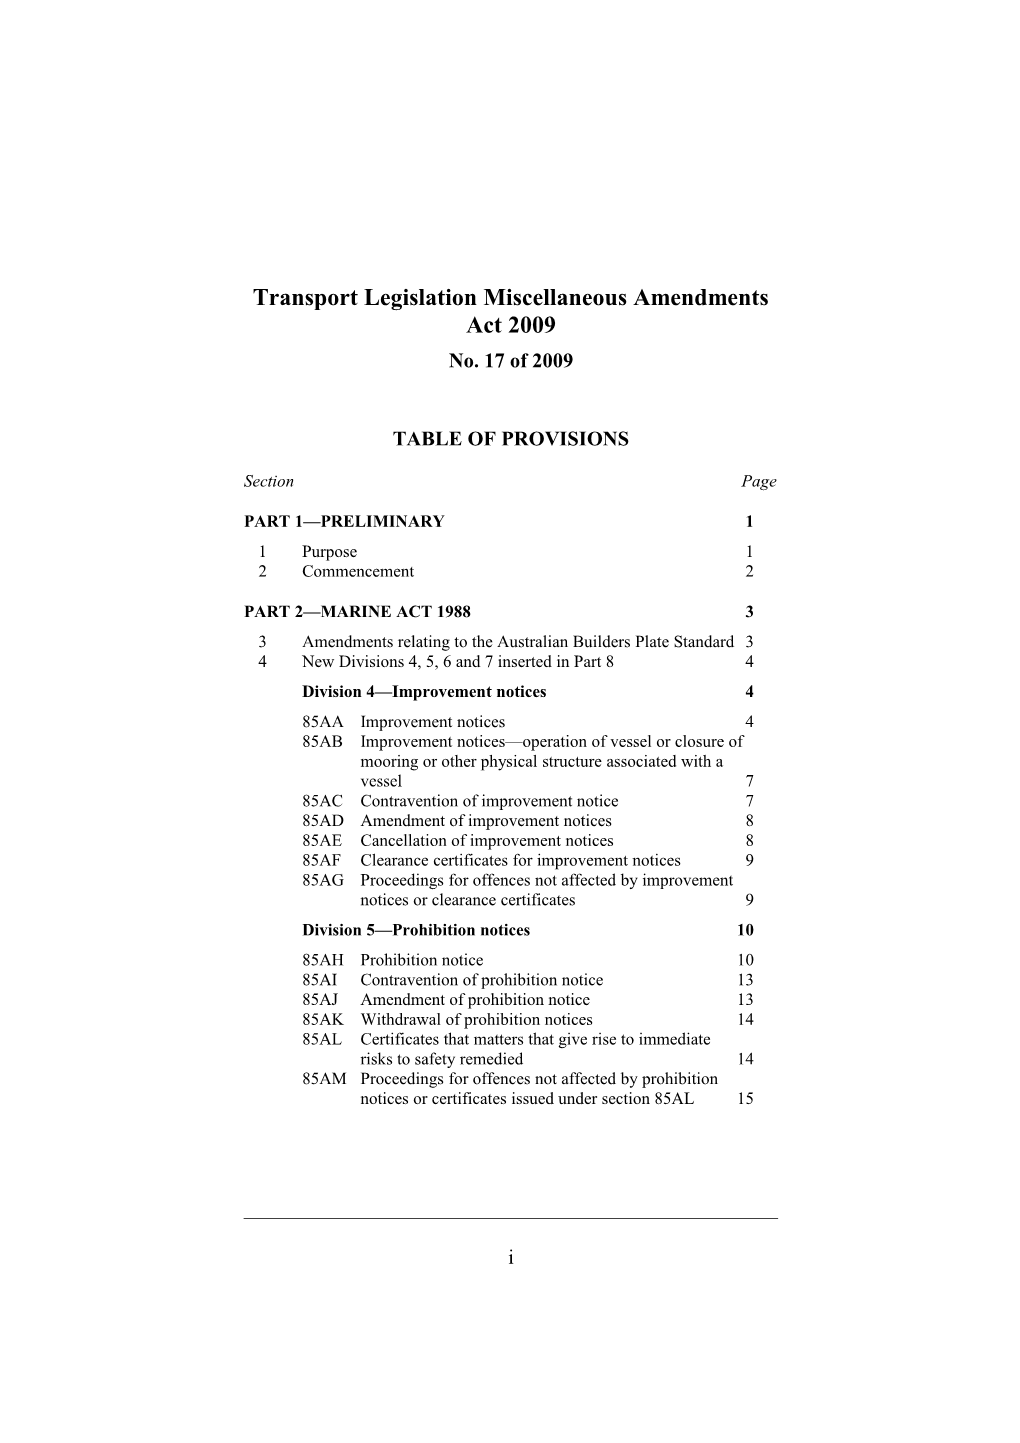 Transport Legislation Miscellaneous Amendments Act 2009